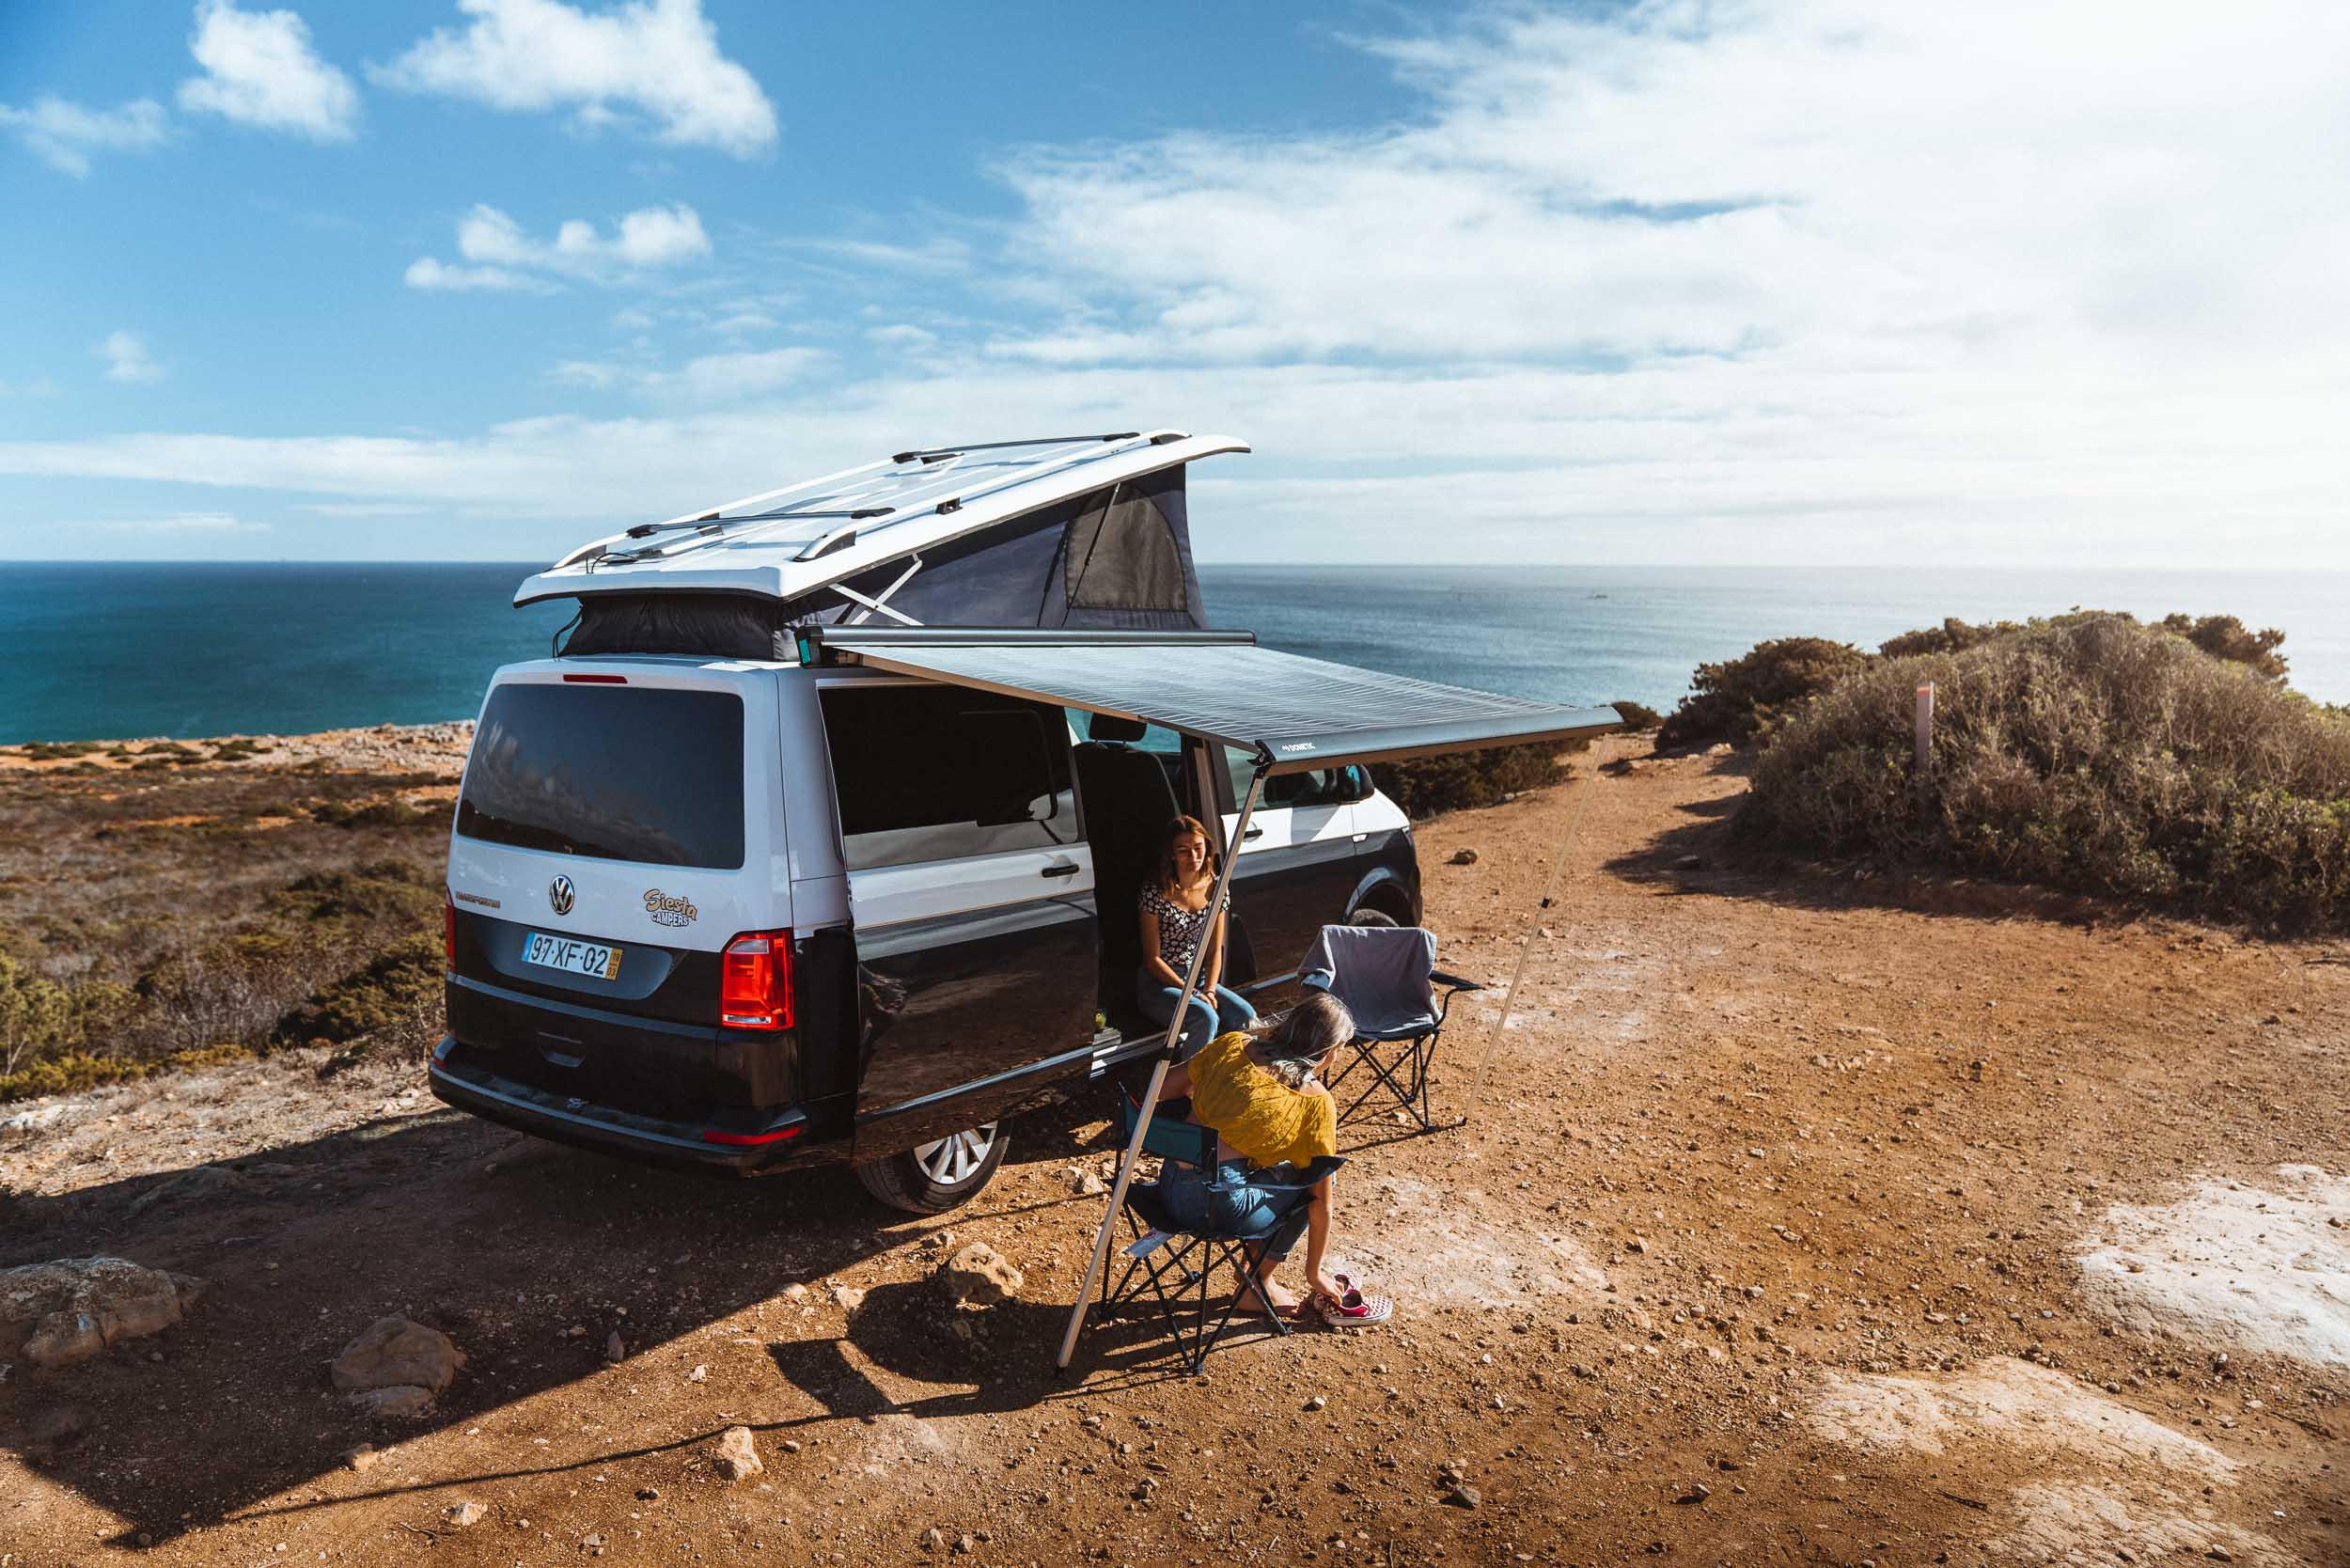 The Atlantic camper van 